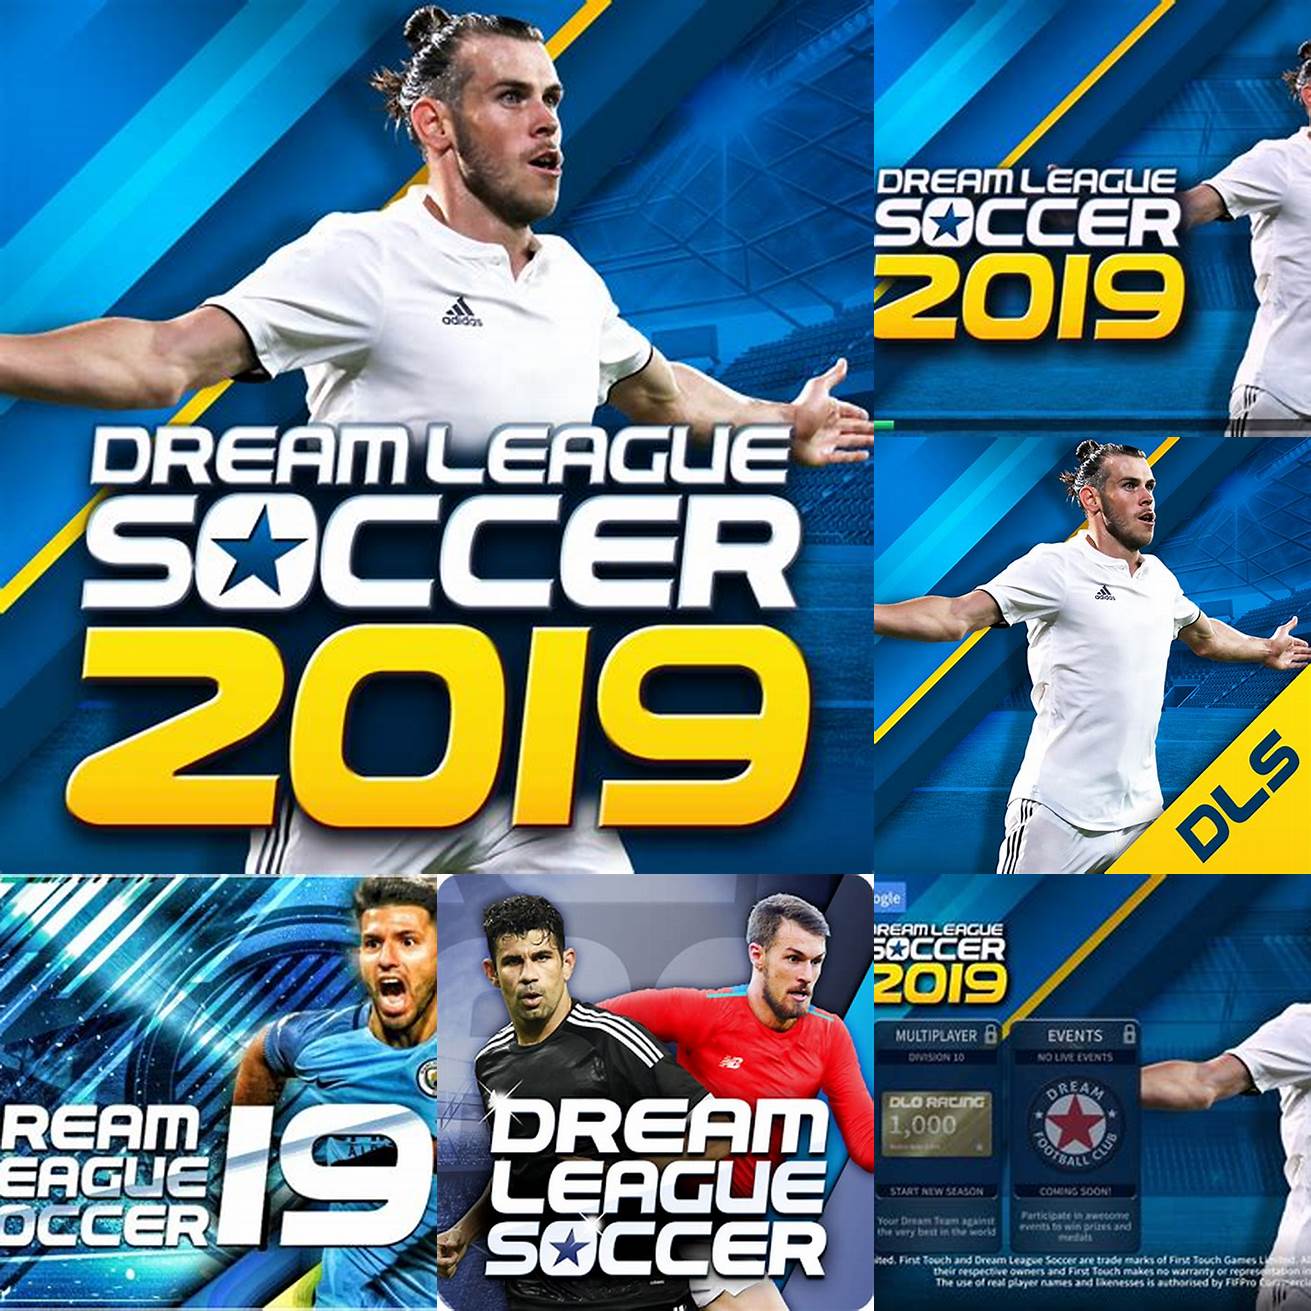 3 Instal Dream League Soccer 2019 Mod Apk di Ponsel Anda